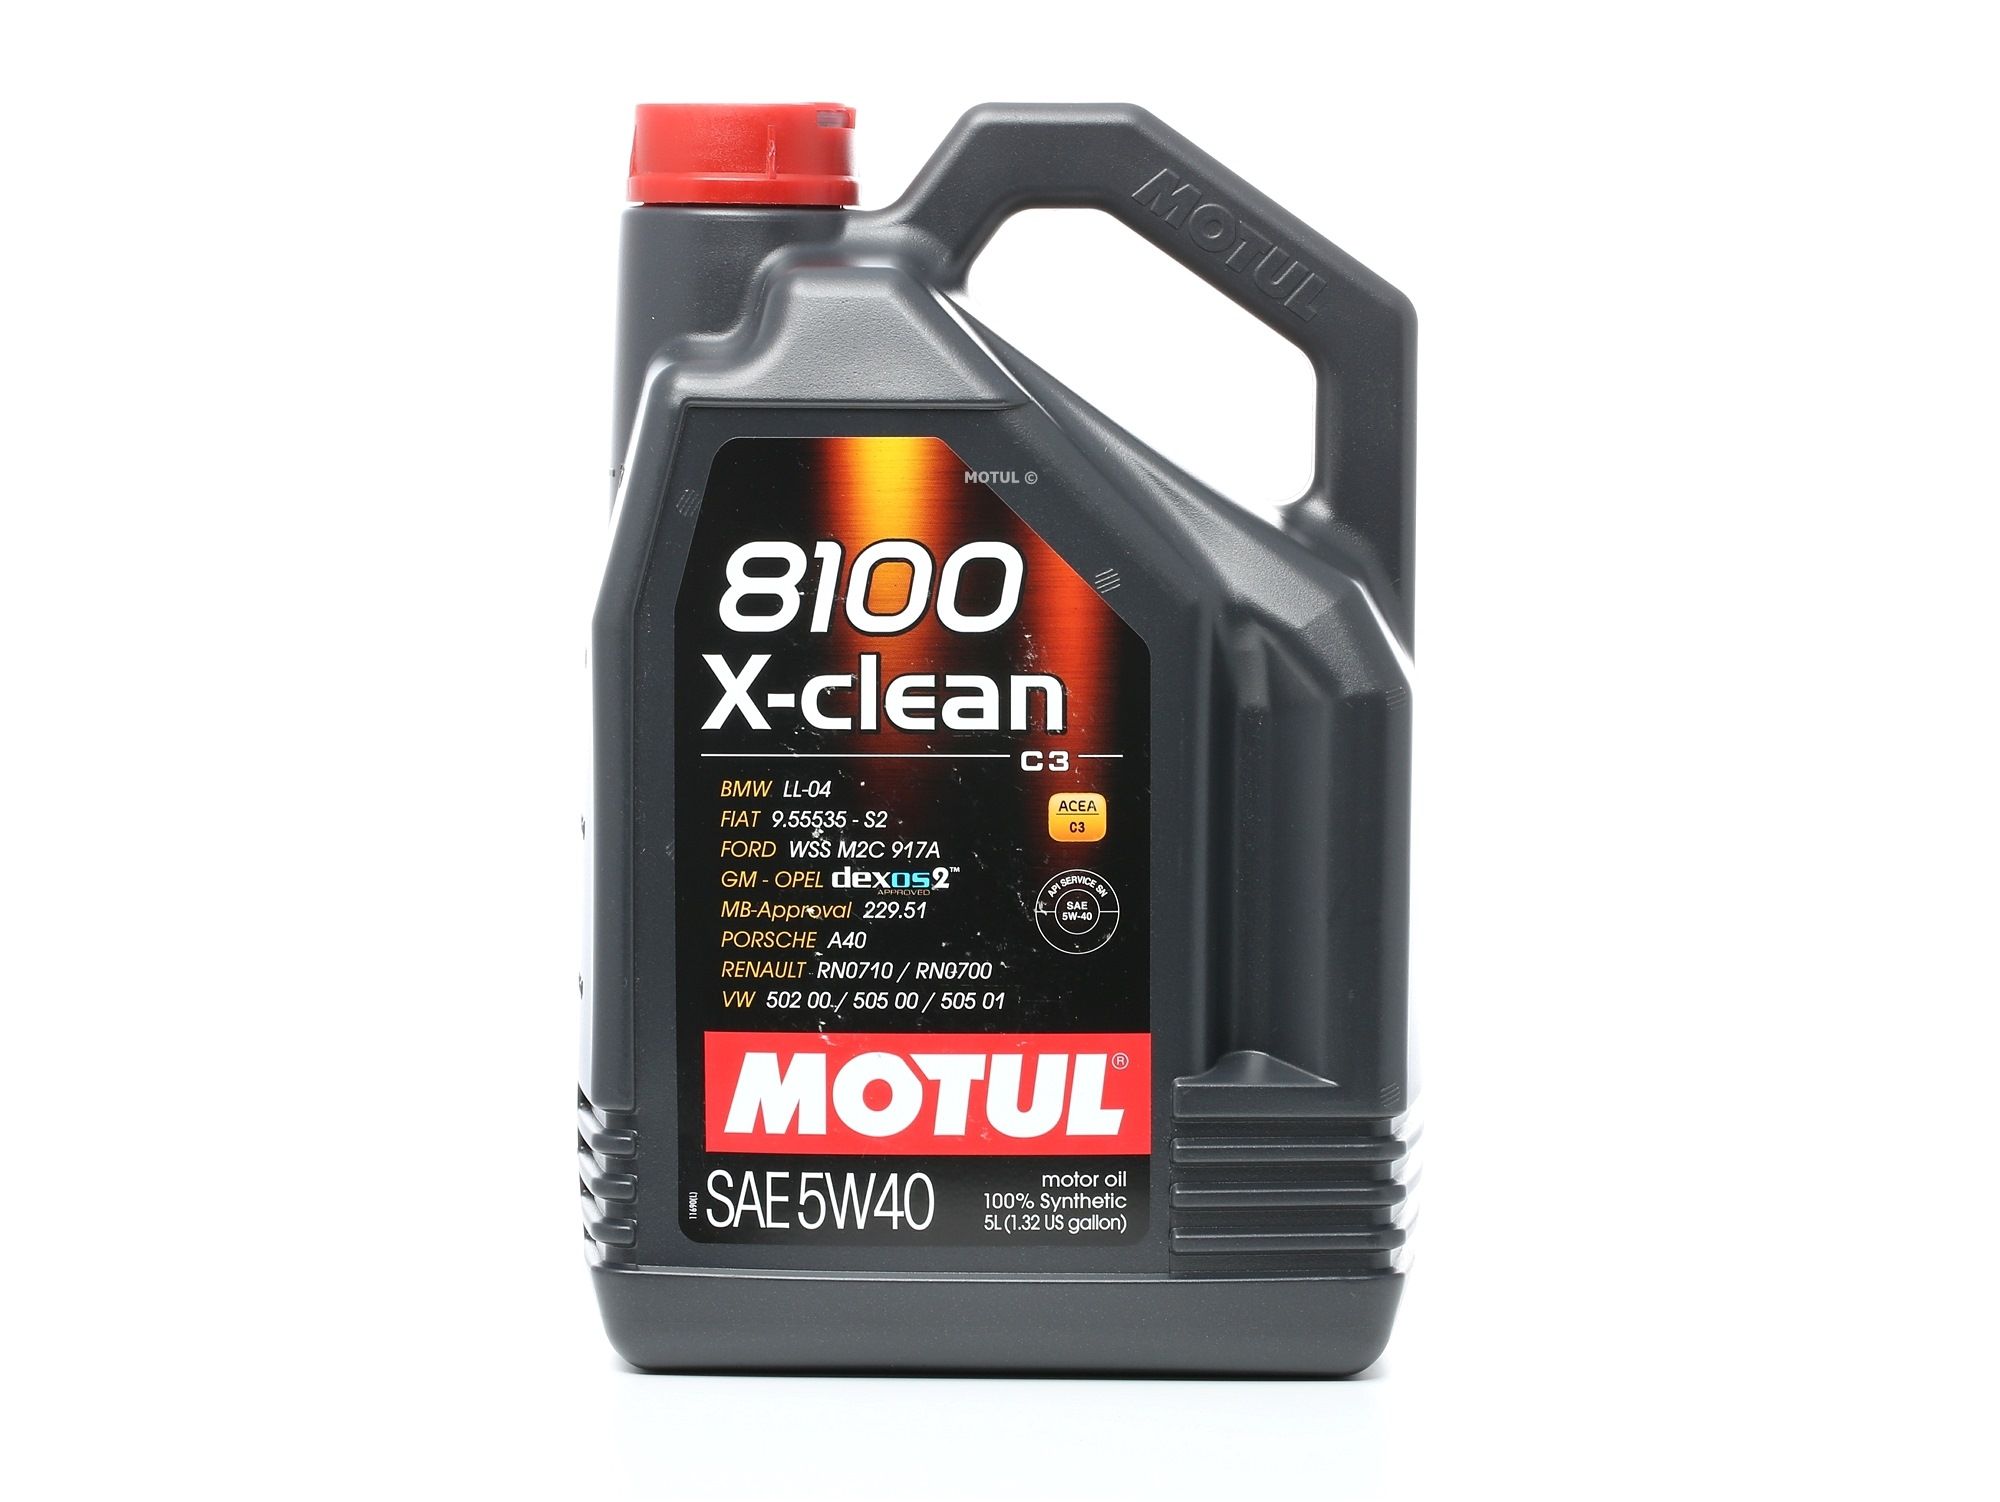 SUZUKI MOTUL X-CLEAN 5W-40, 5l, Synthetiköl Motoröl 102051 günstig